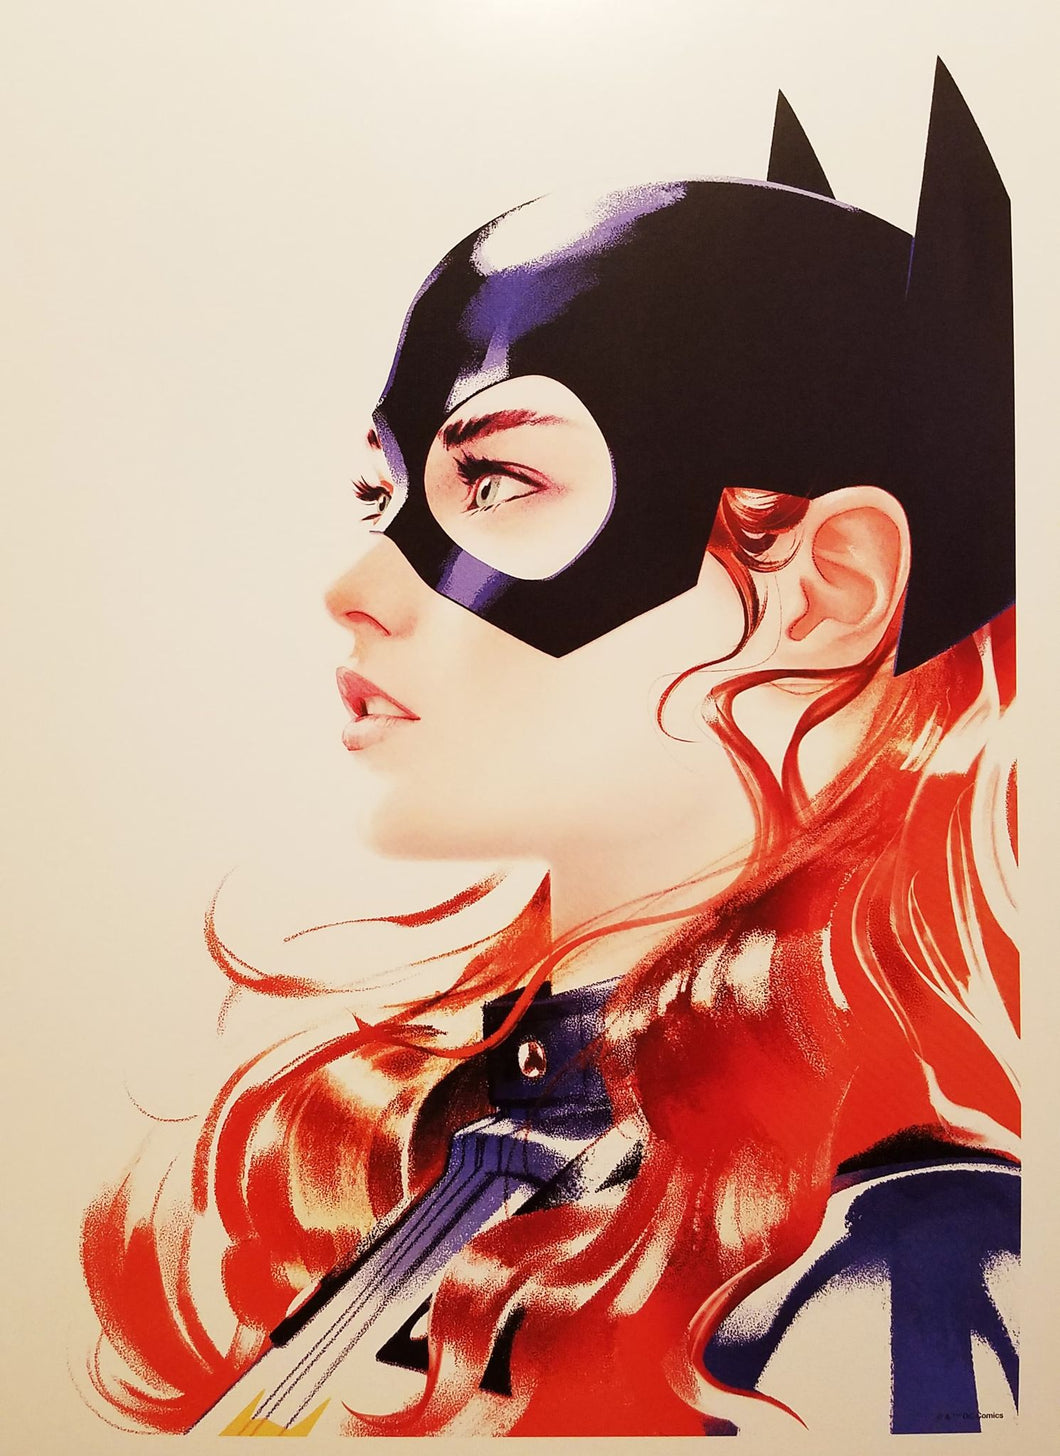 Batgirl 12x16 Art Print by Joshua Middleton, New DC Comics cardstock